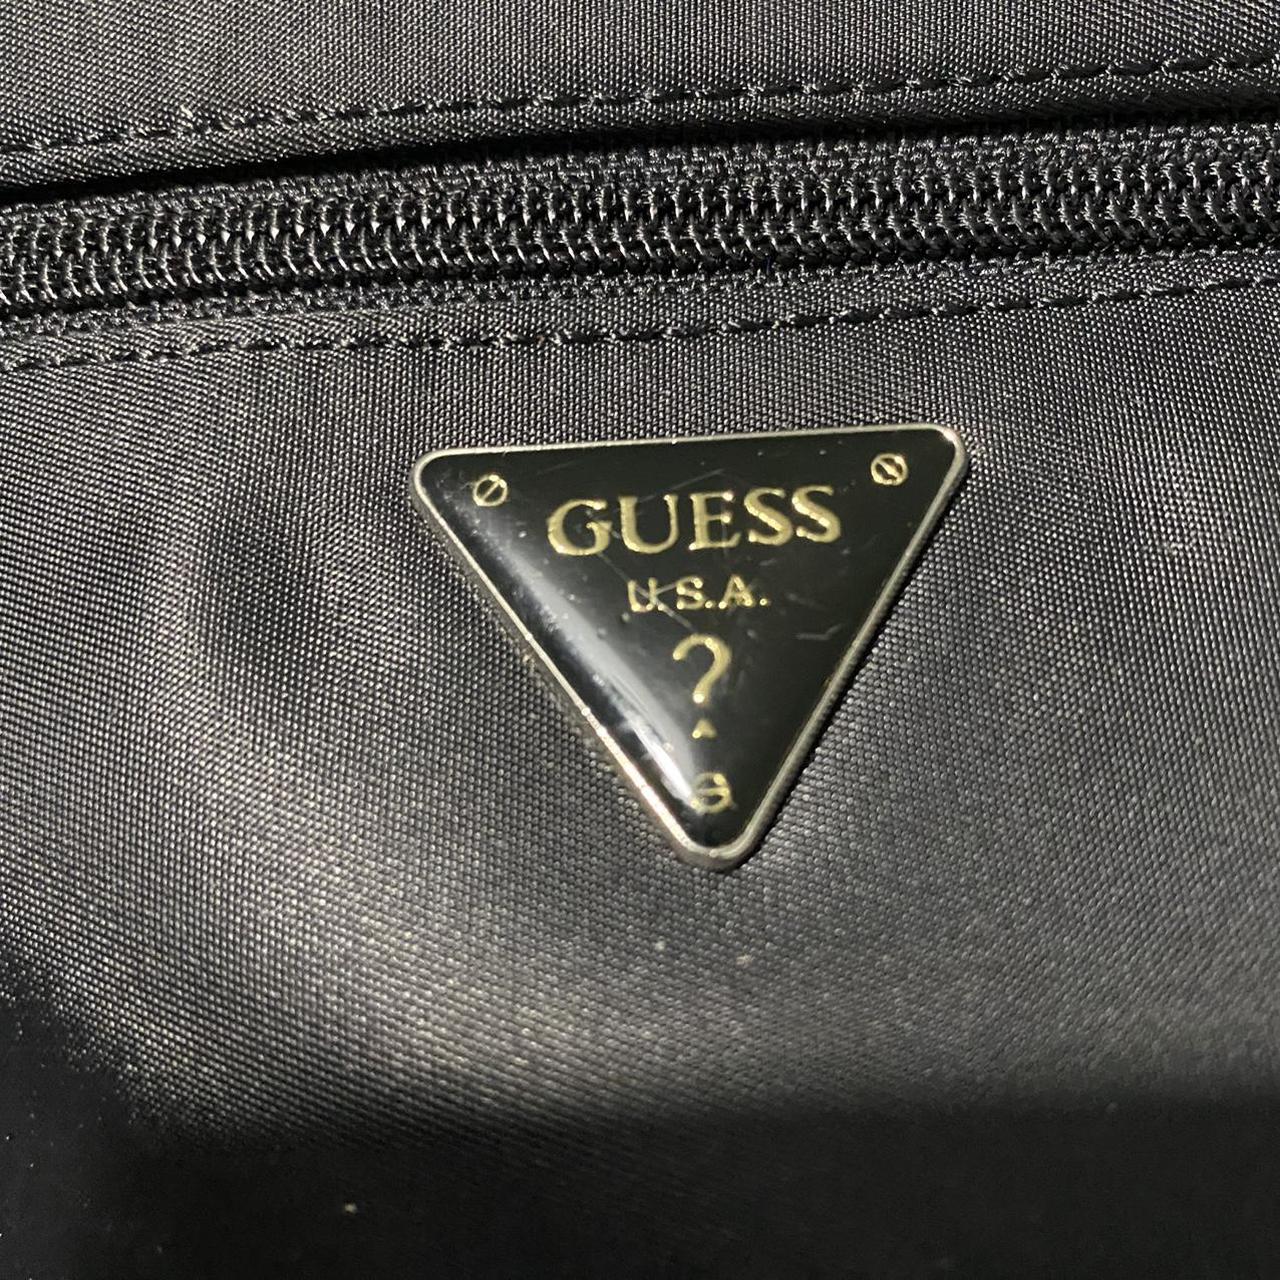 Product Image 2 - Small black guess bag

Crossbody bag